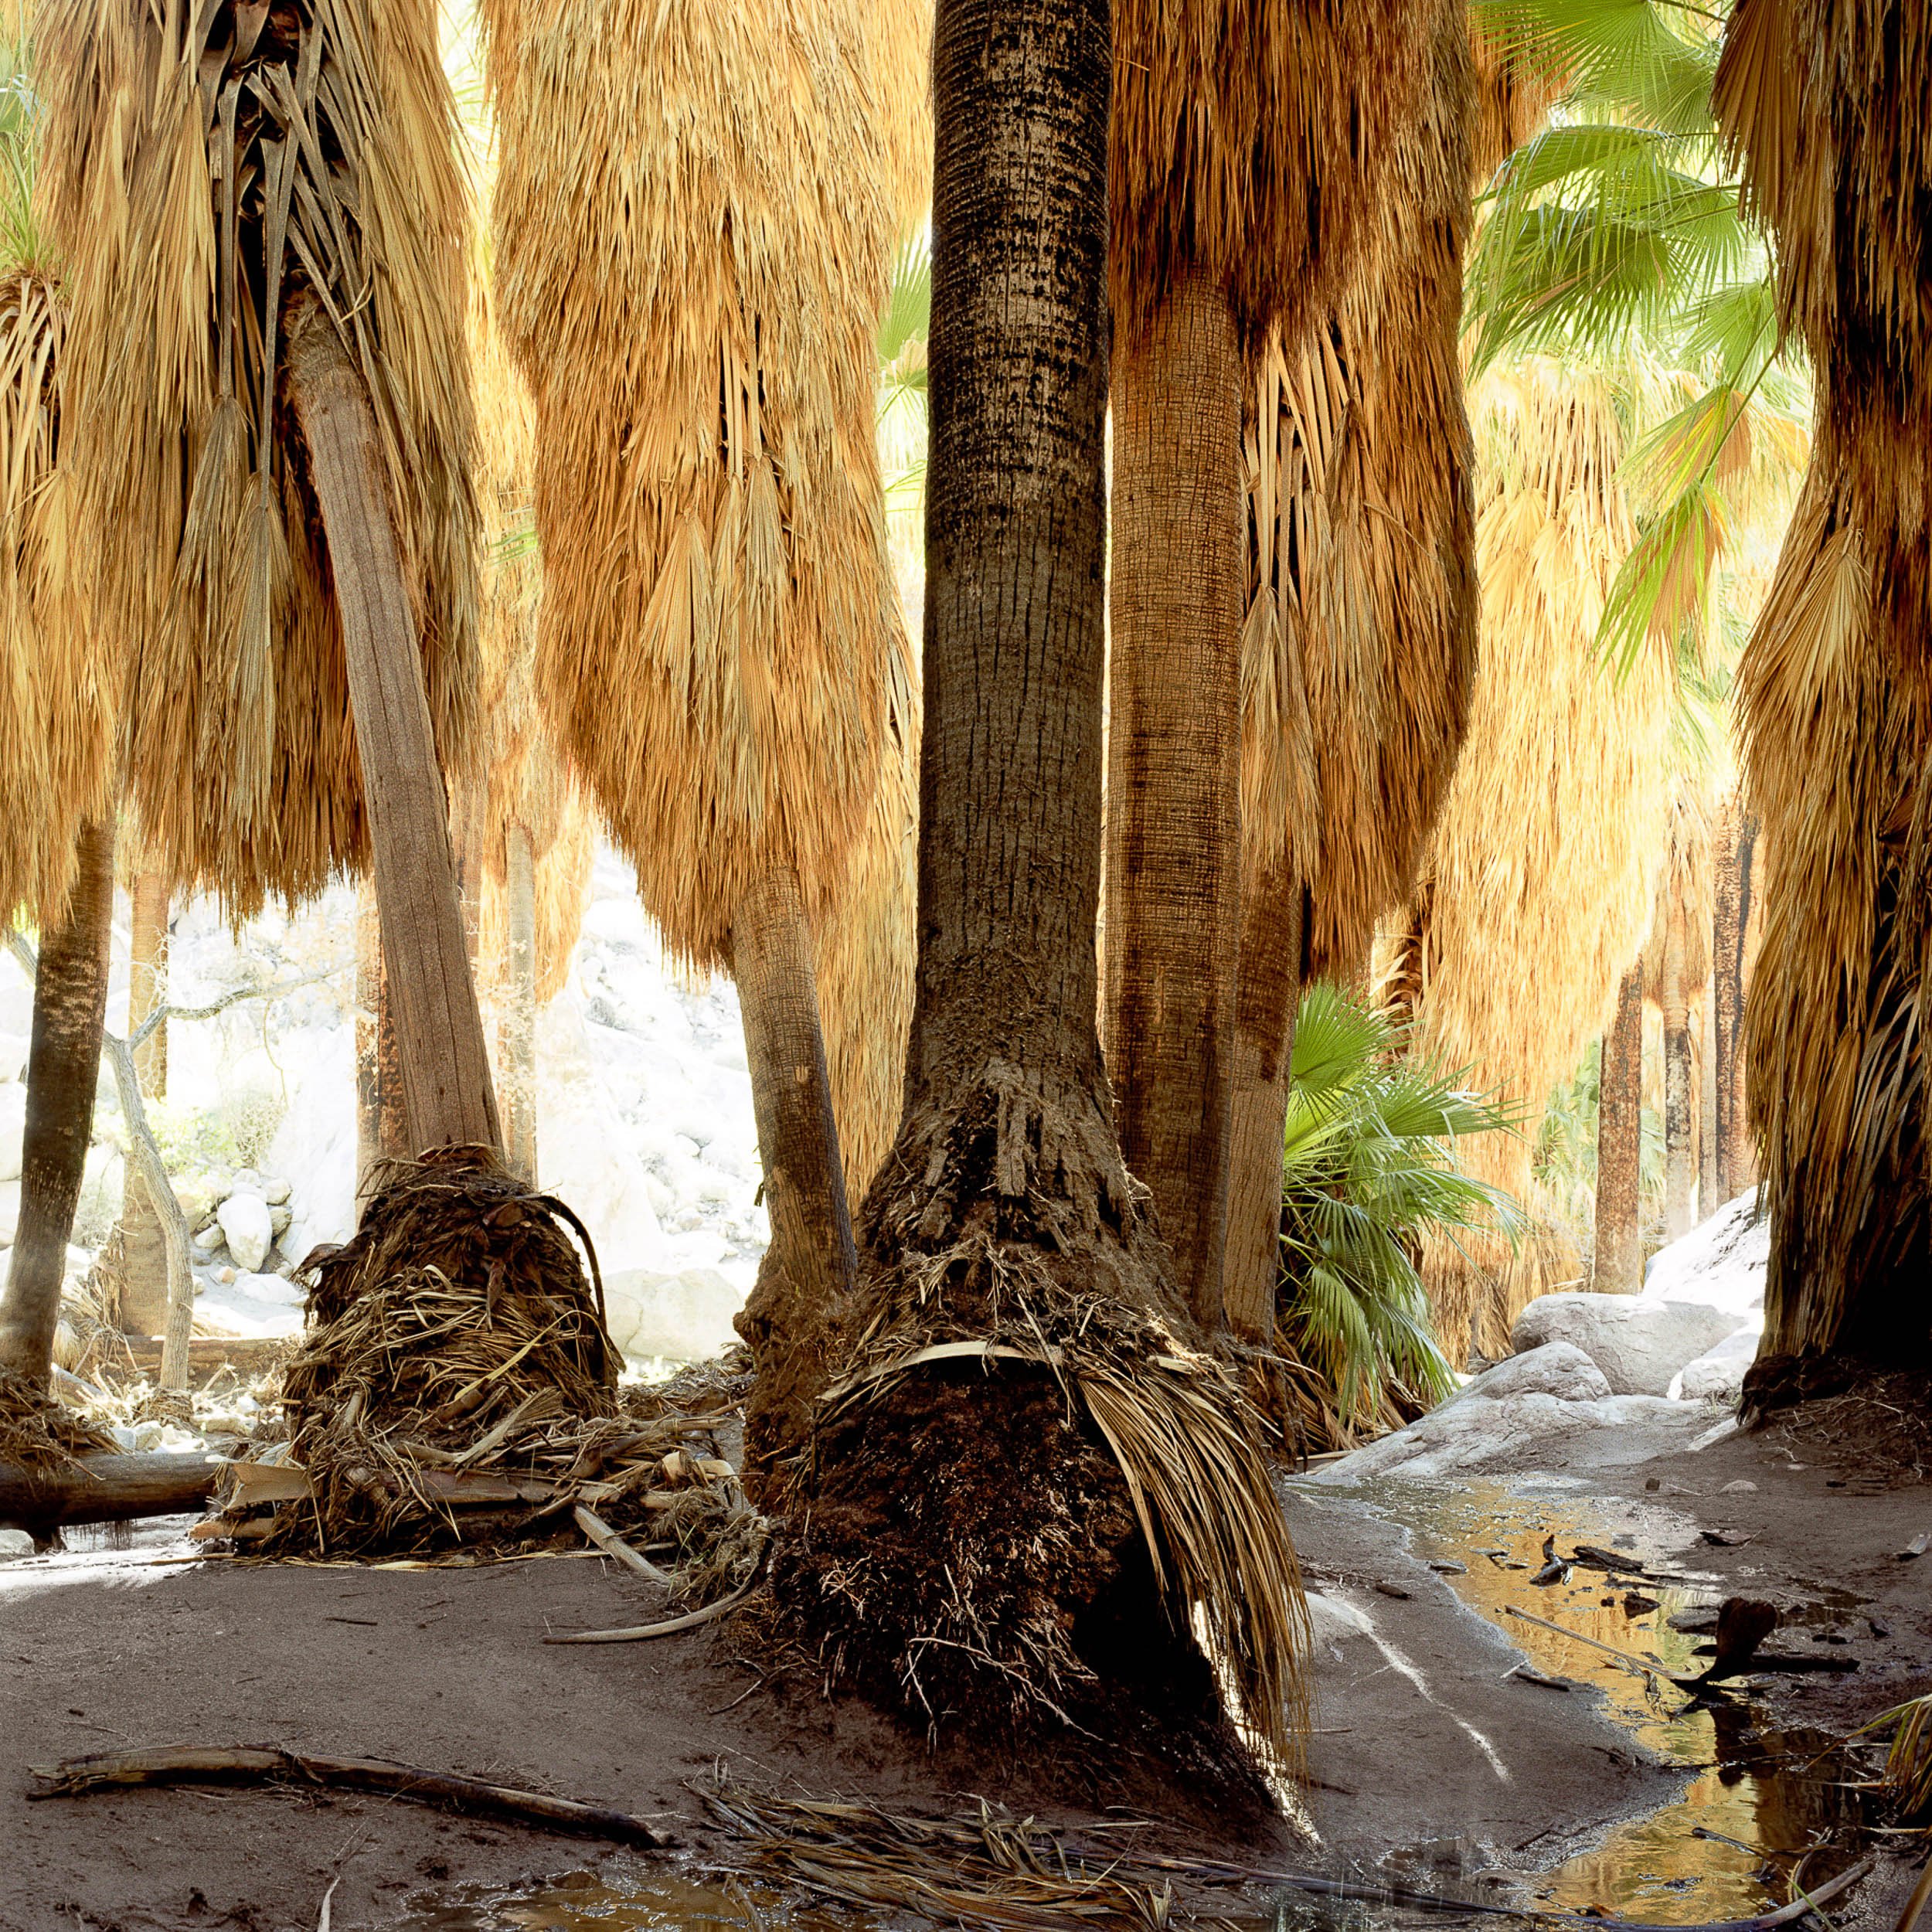   California Fan Palm Oasis, Hell's Hole, Anza Borrego Desert  